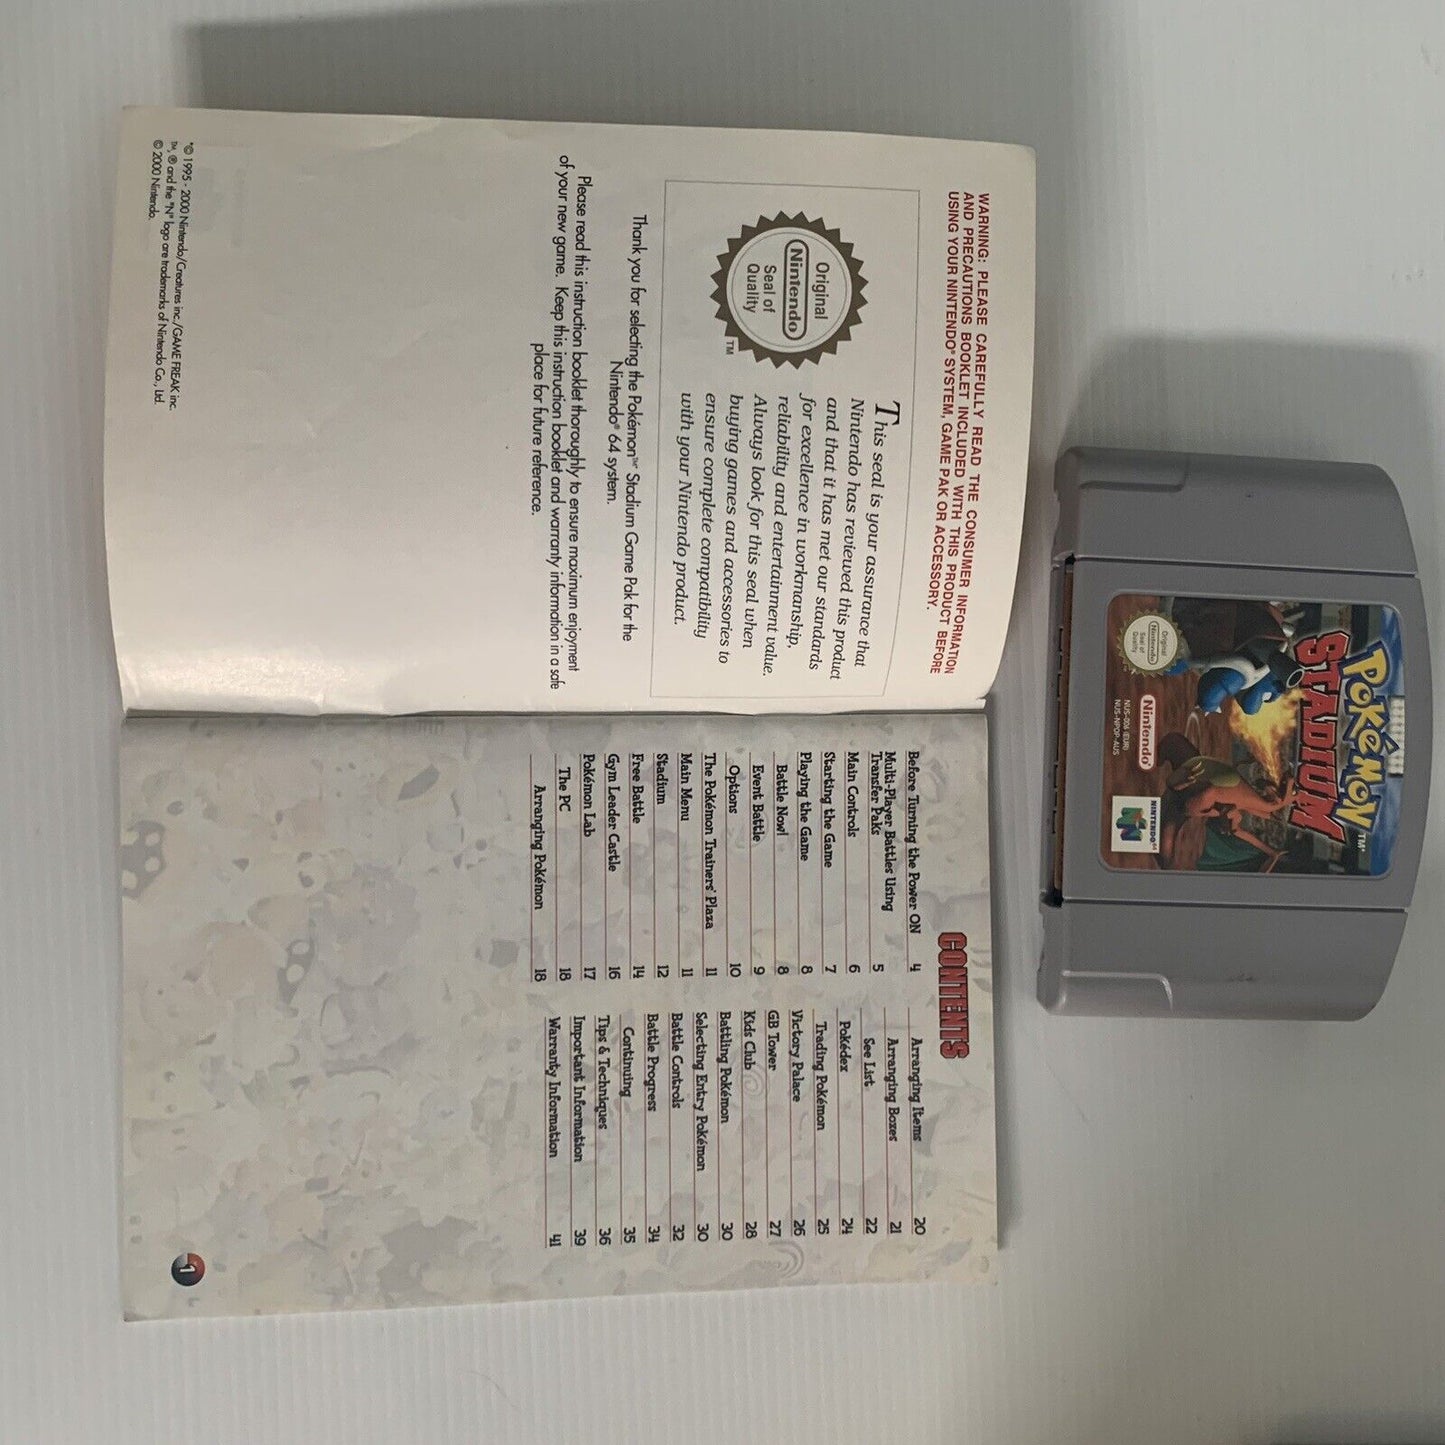 Pokemon Stadium + Pokemon Stadium 2 + Transfer Pak Nintendo 64 N64 (Bundle)